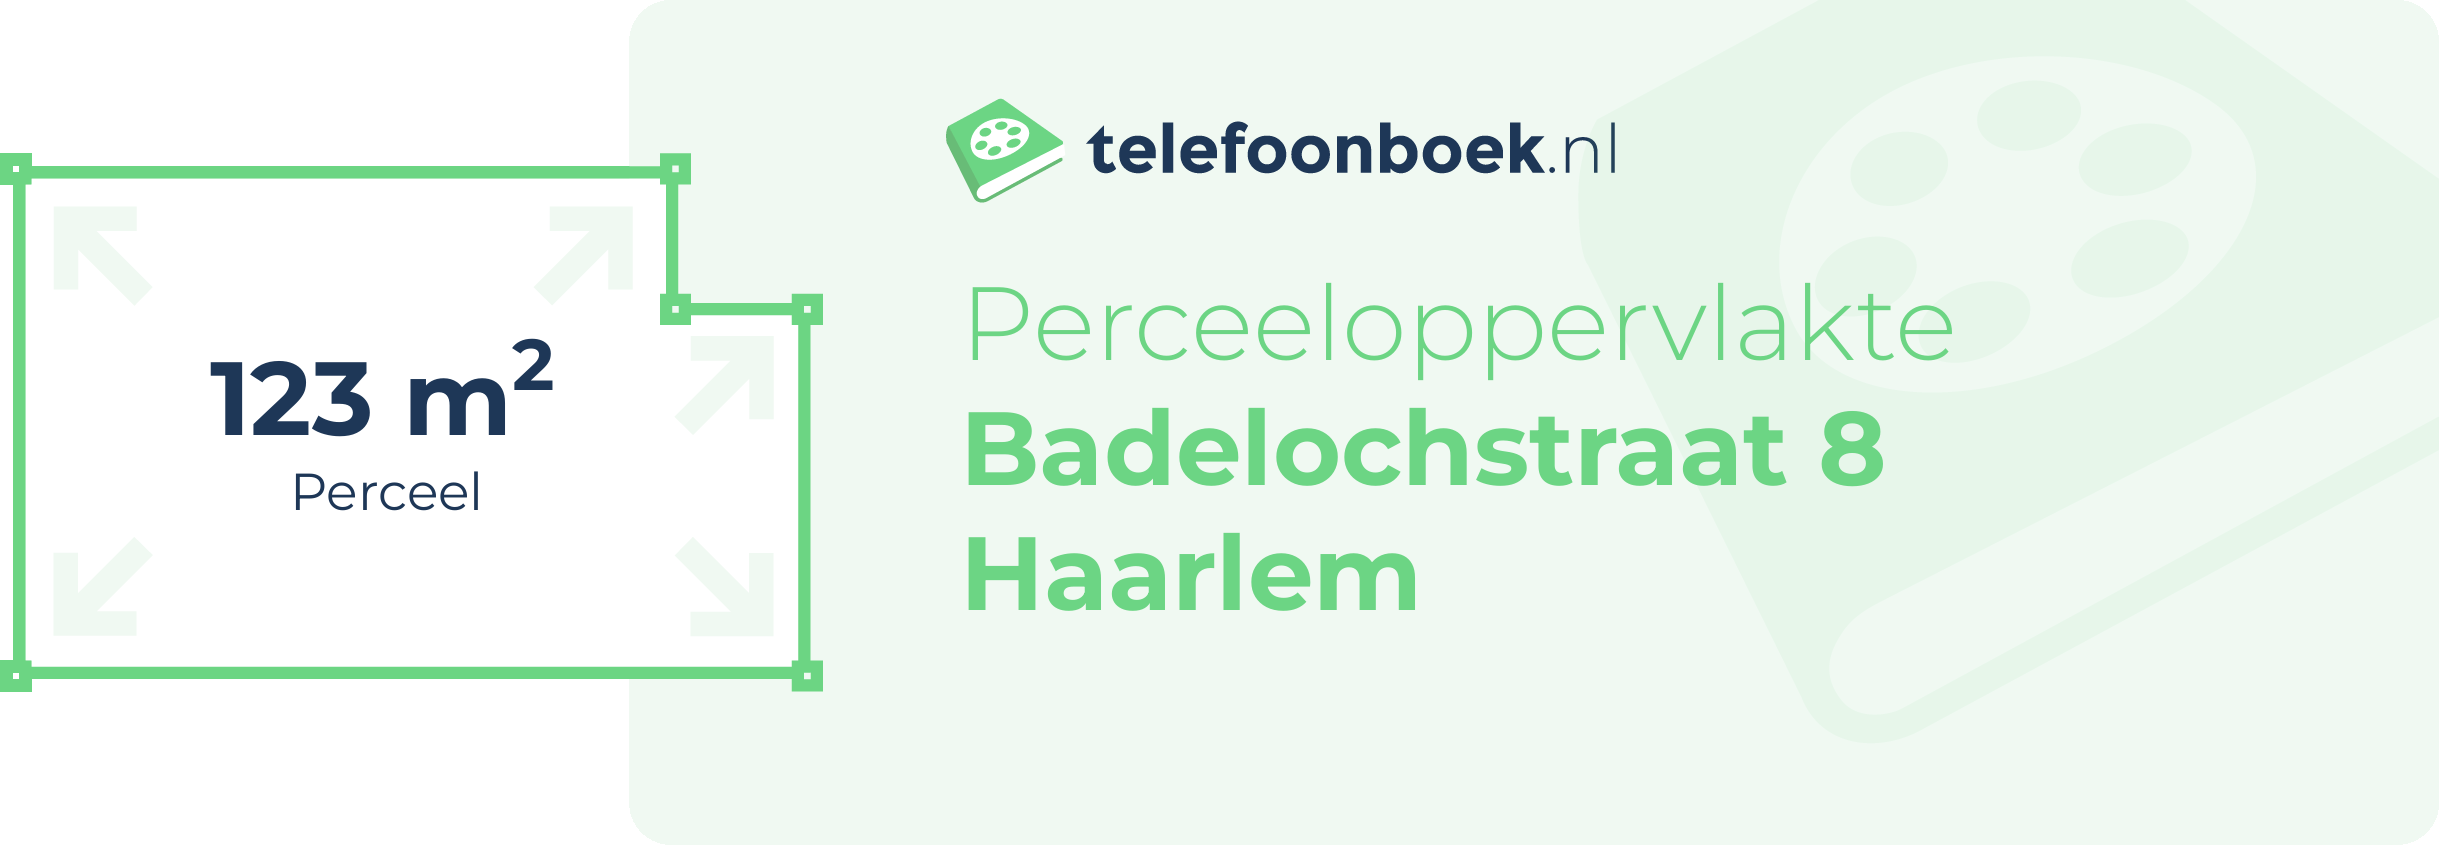 Perceeloppervlakte Badelochstraat 8 Haarlem